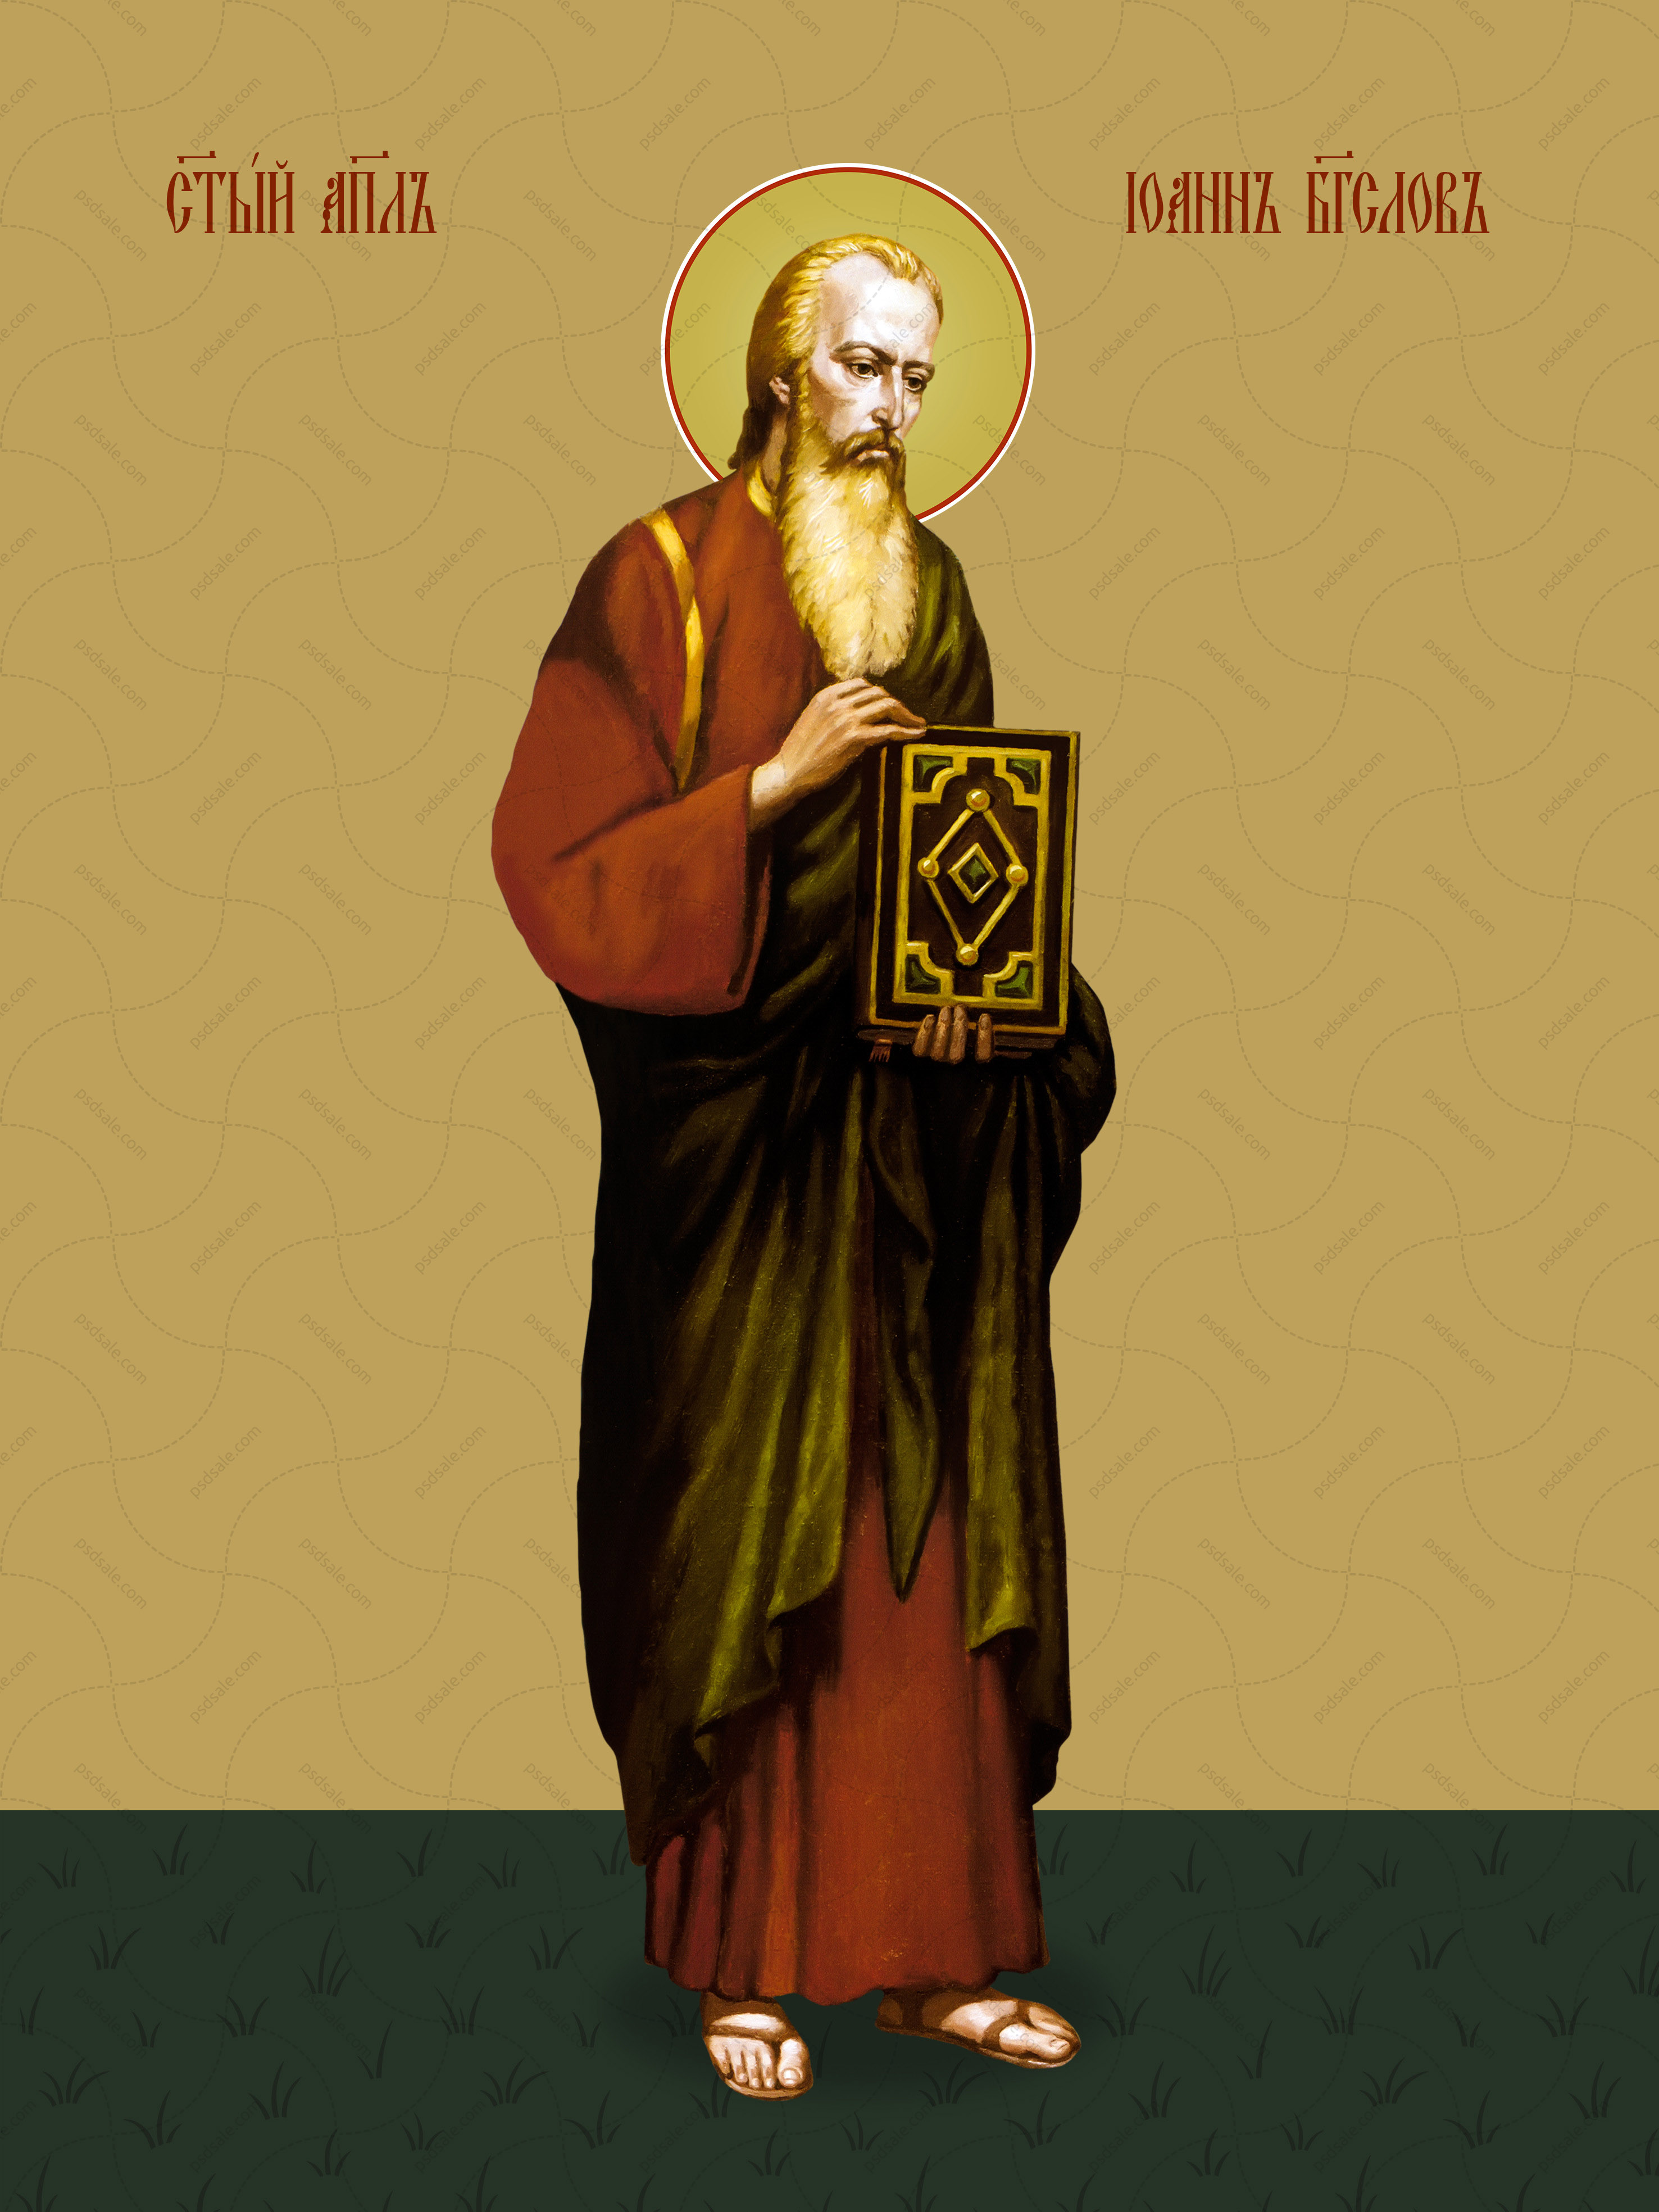 John the Evangelist, apostle